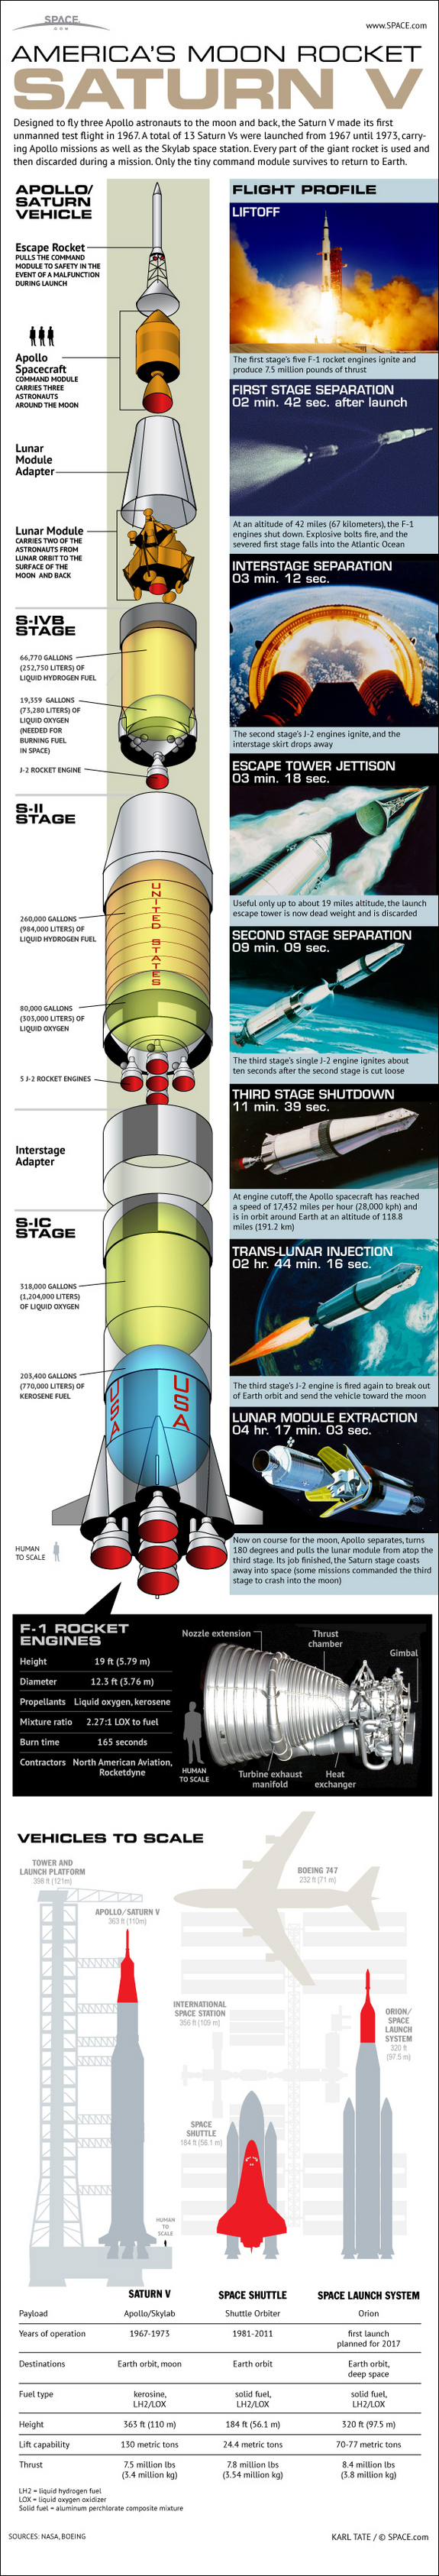 saturn-v-moon-rocket-45th-anniversary-121112a-02